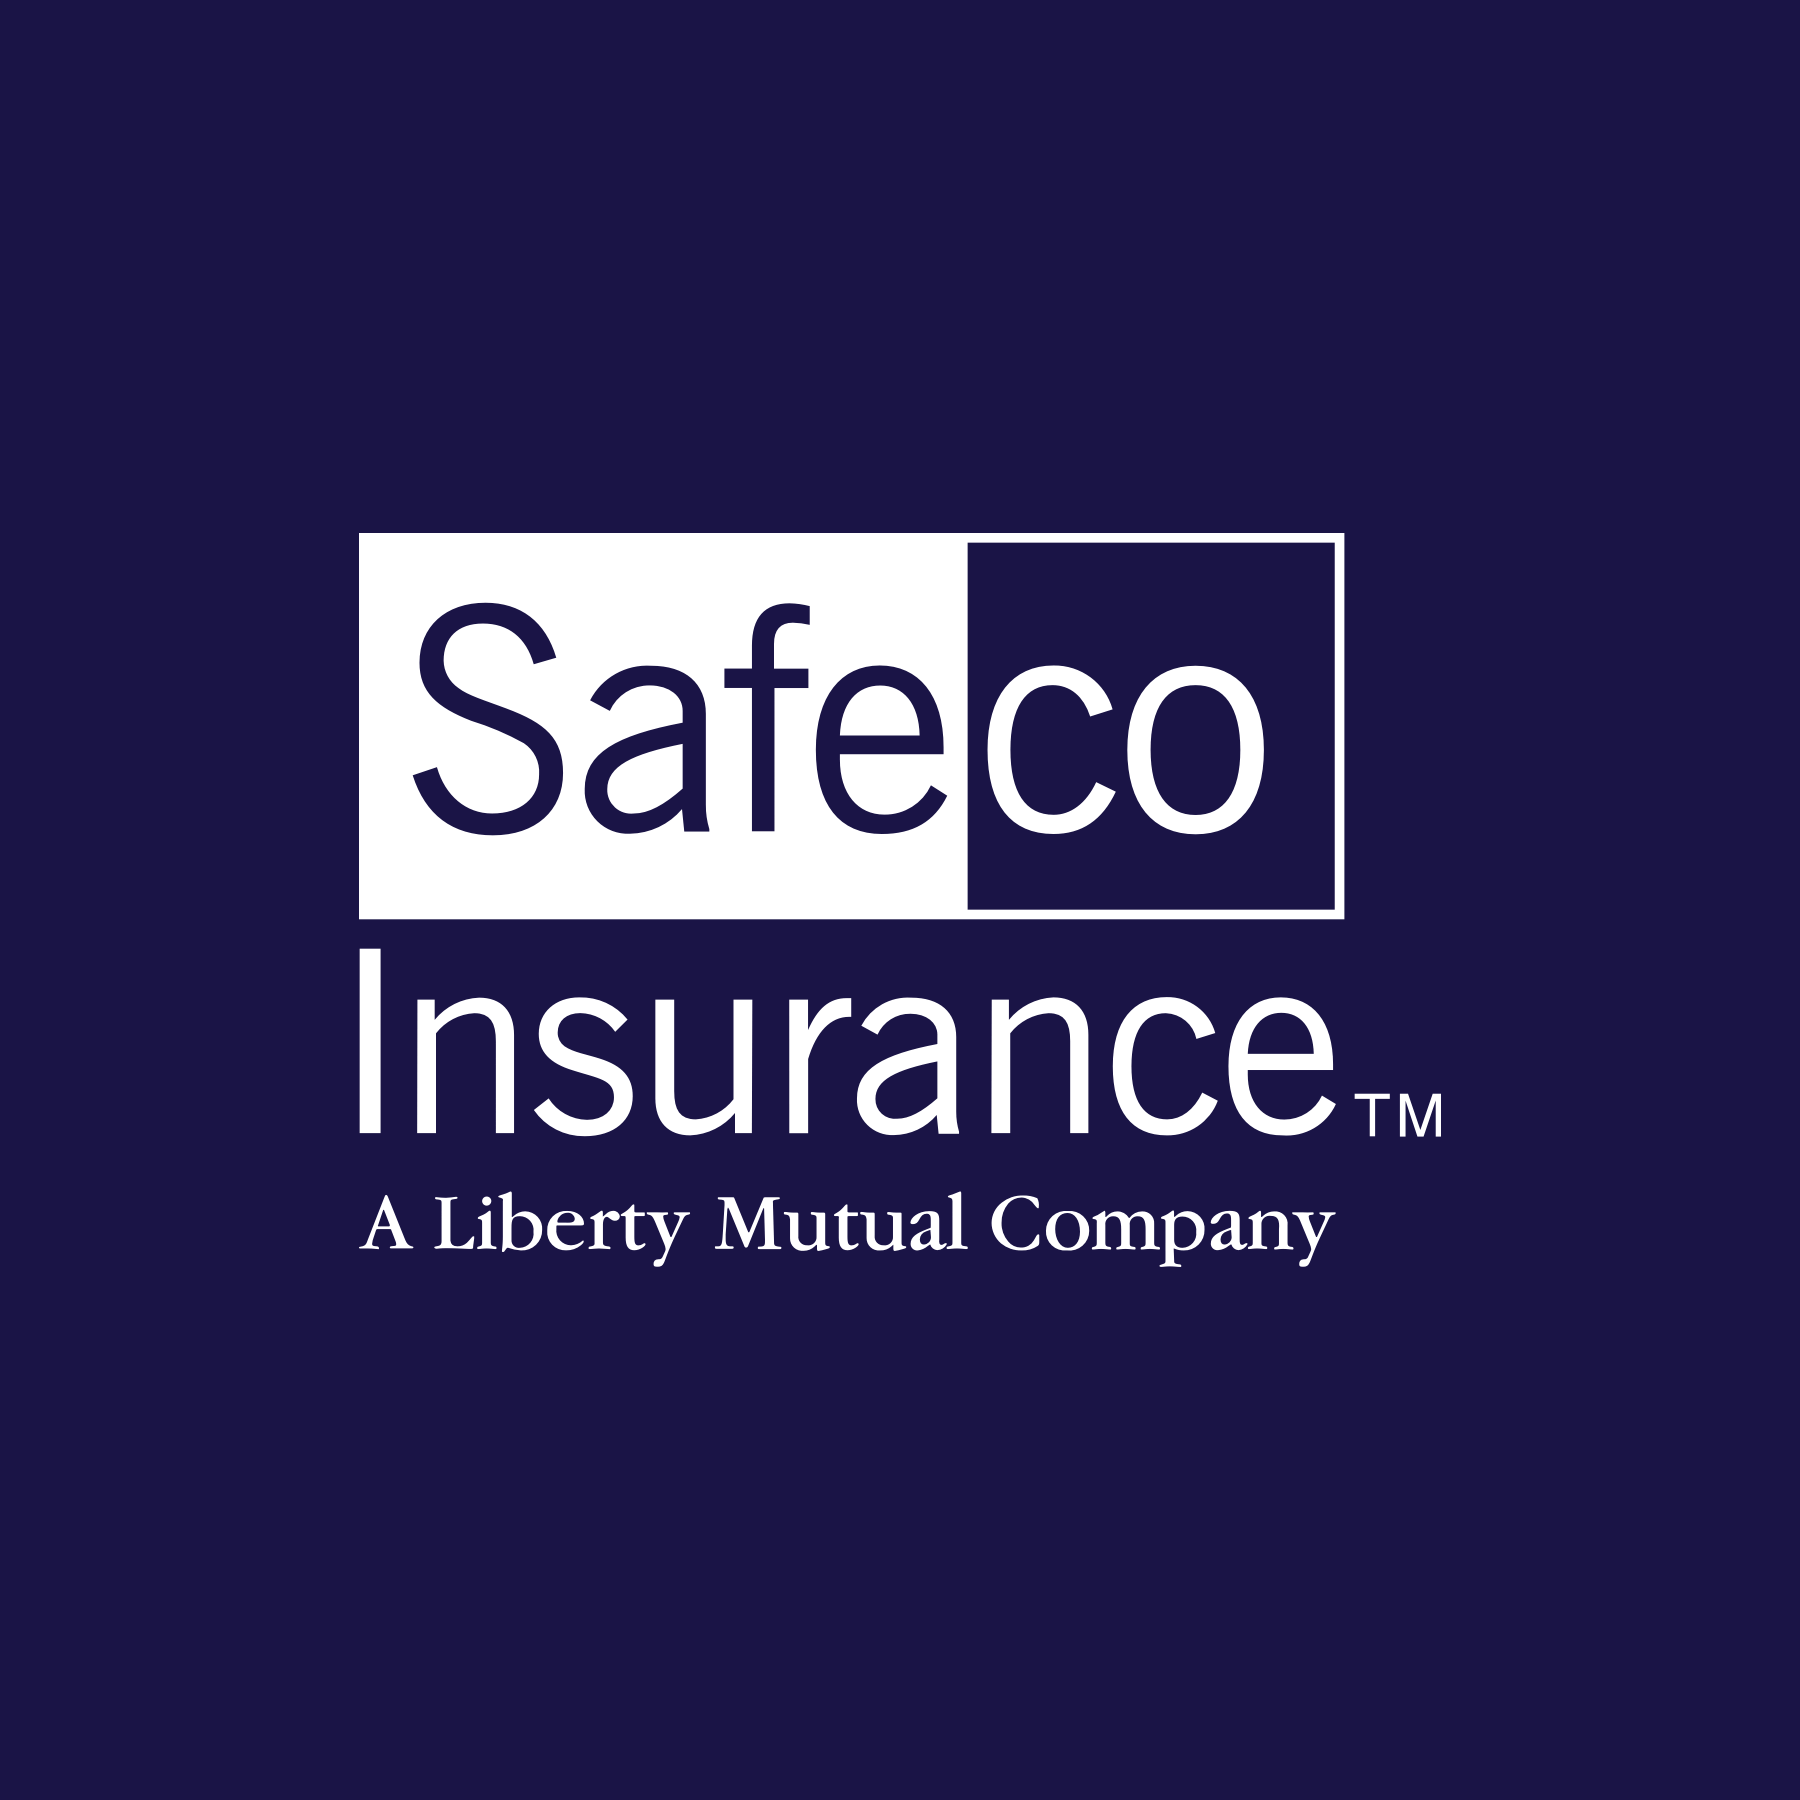 H-Safeco Insurance